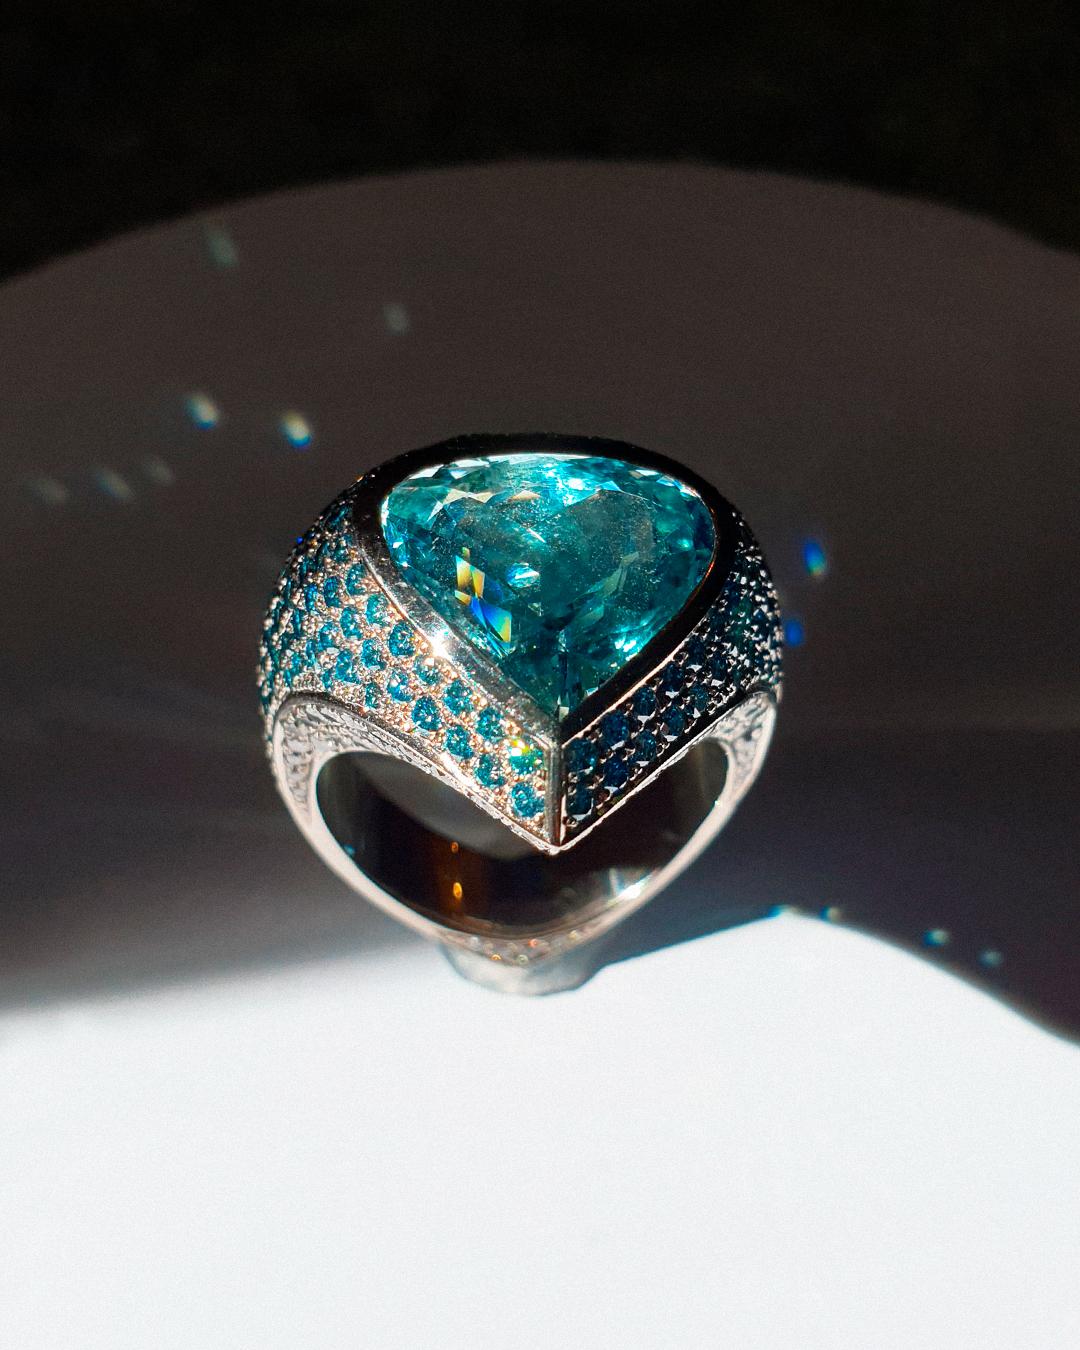 Women's Aquamarine Cocktail Ring 6.24ct Blue, 18k White Gold, 357 hand set diamonds For Sale